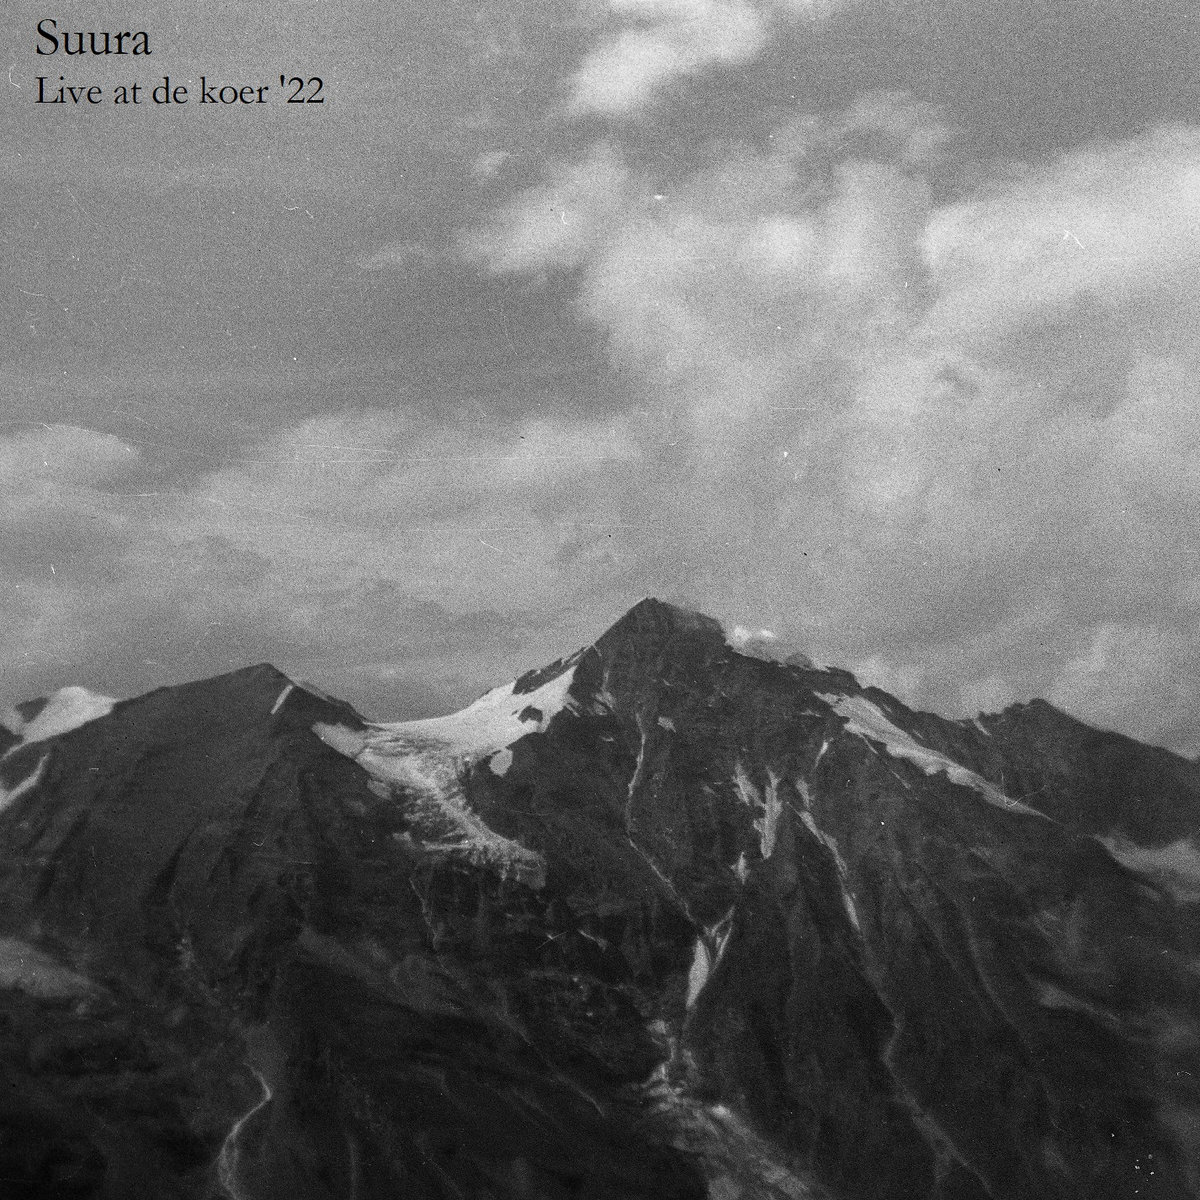 Suura - Live at de Koer by Nicolas Van Belle